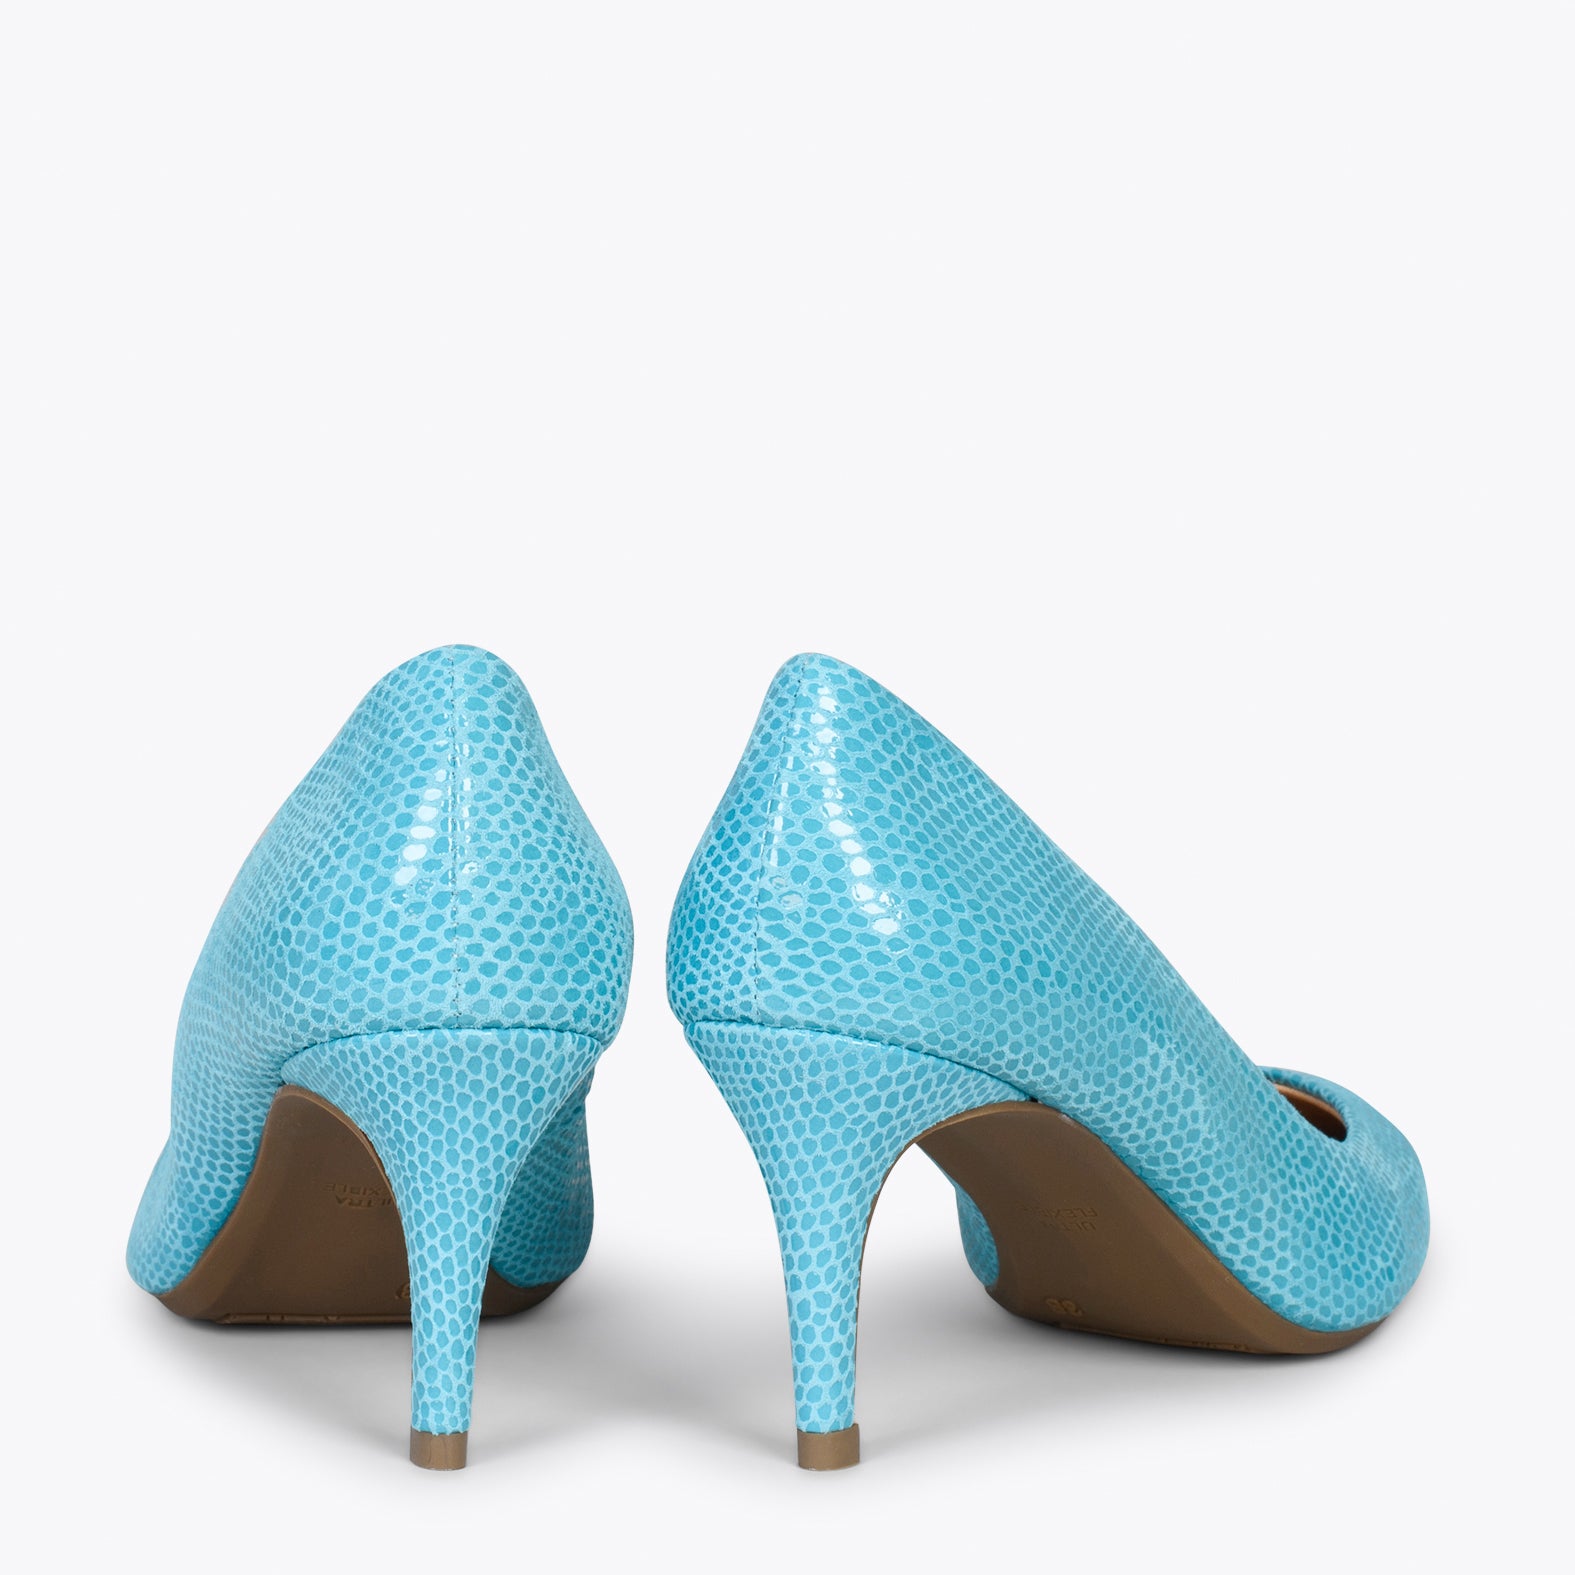 STILETTO ROYAL – BLUE laminated suede leather stilettos